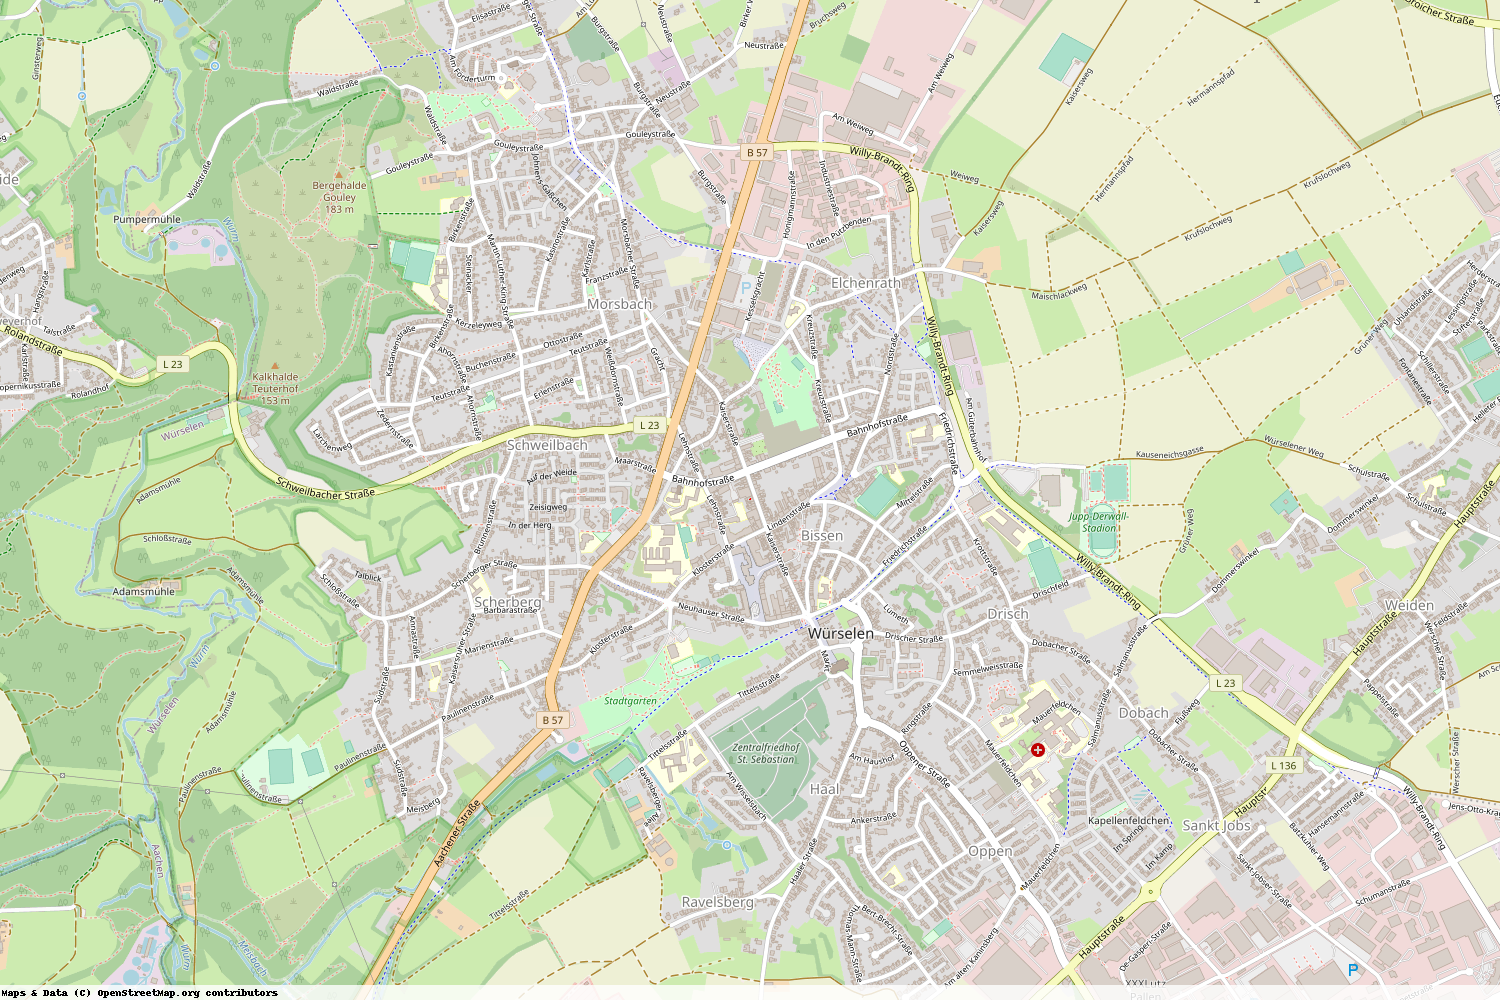 Ist gerade Stromausfall in Nordrhein-Westfalen - Städteregion Aachen - Würselen?